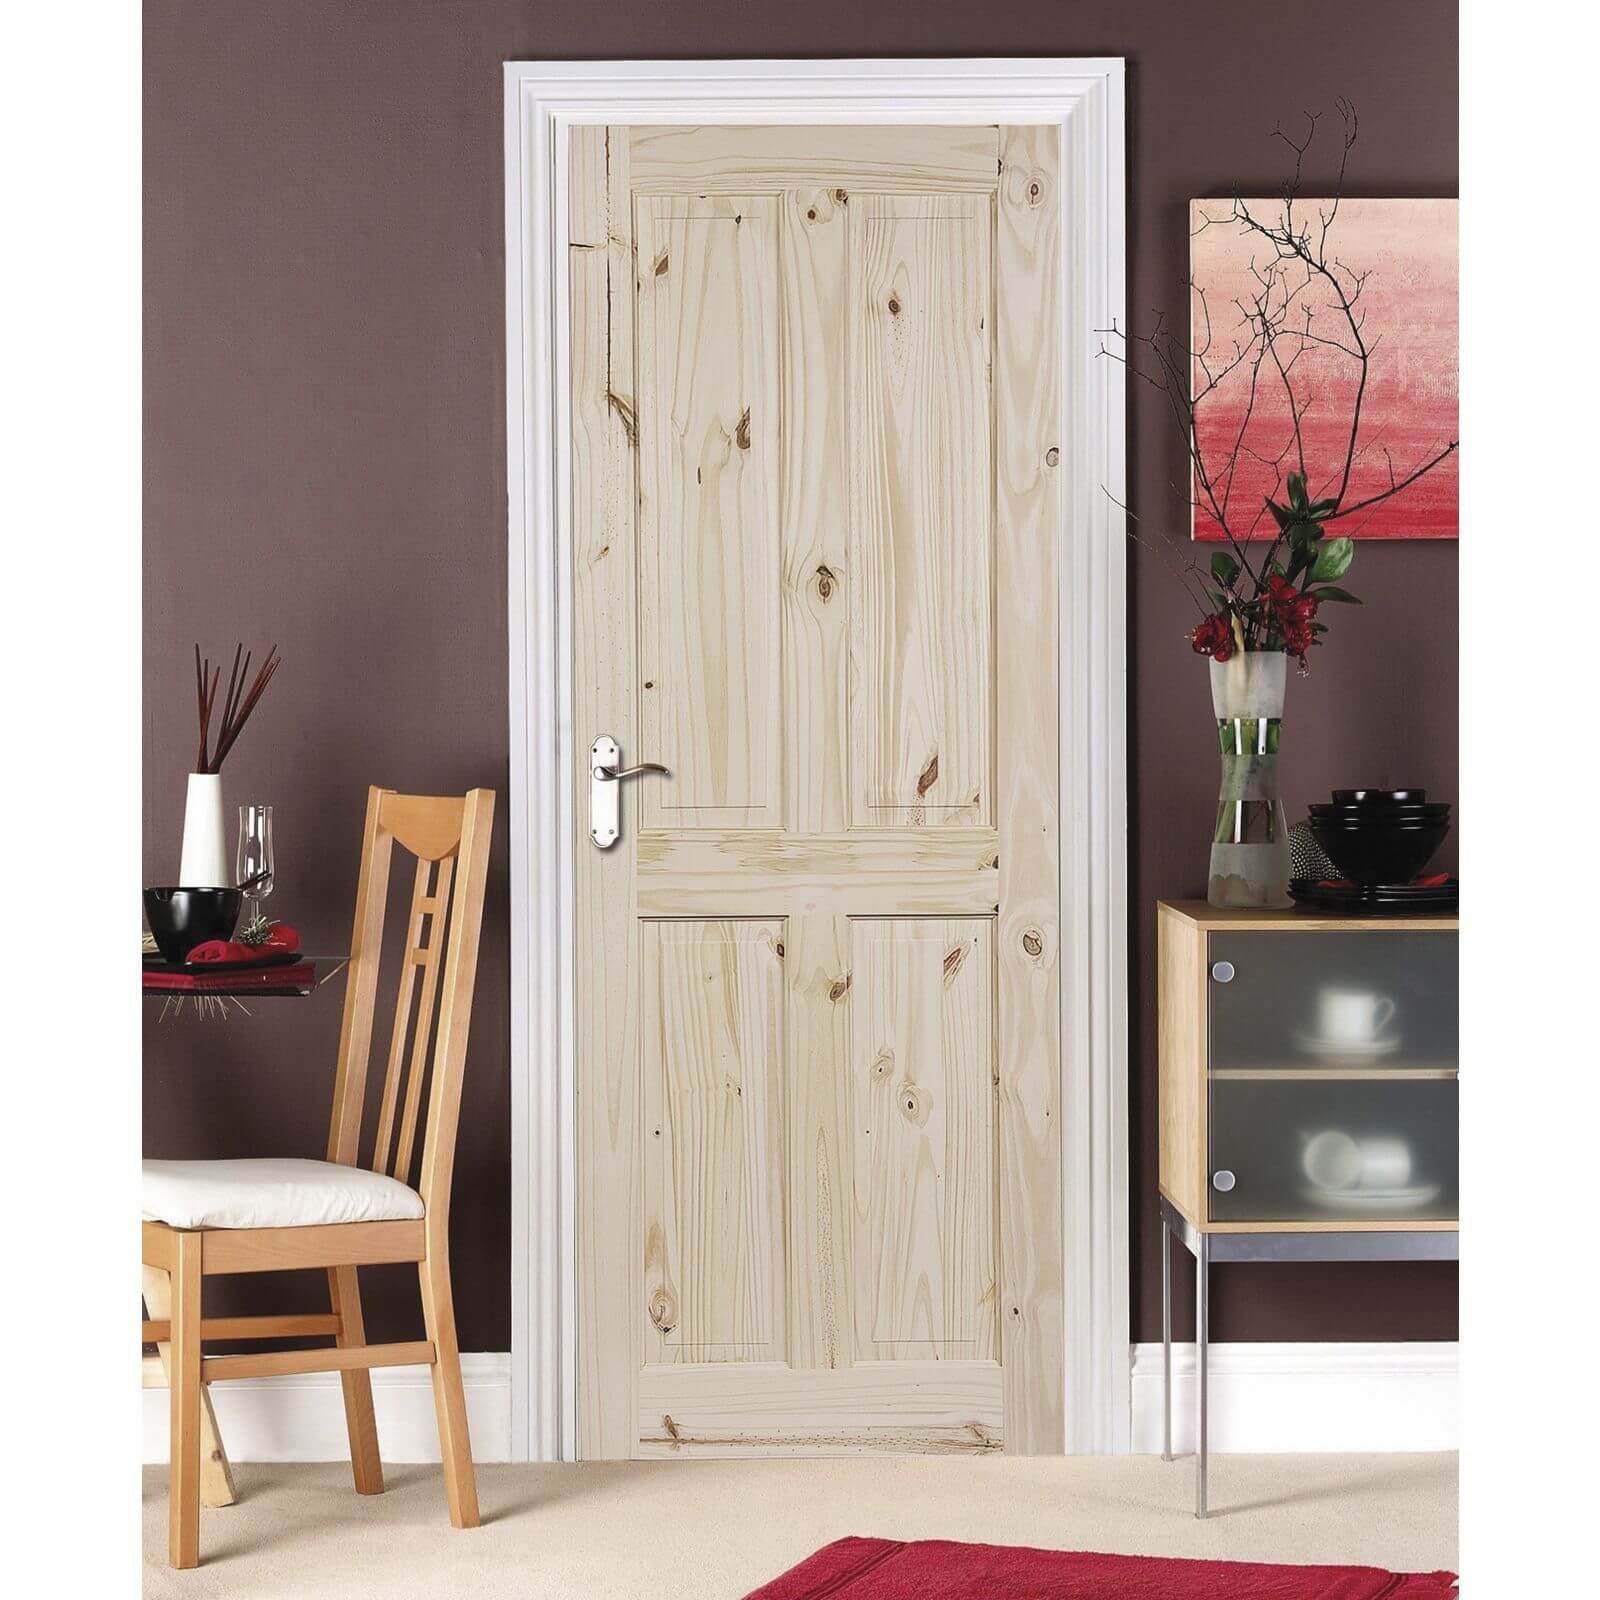 London 4 Panel Knotty Pine Internal Door - 762mm Wide